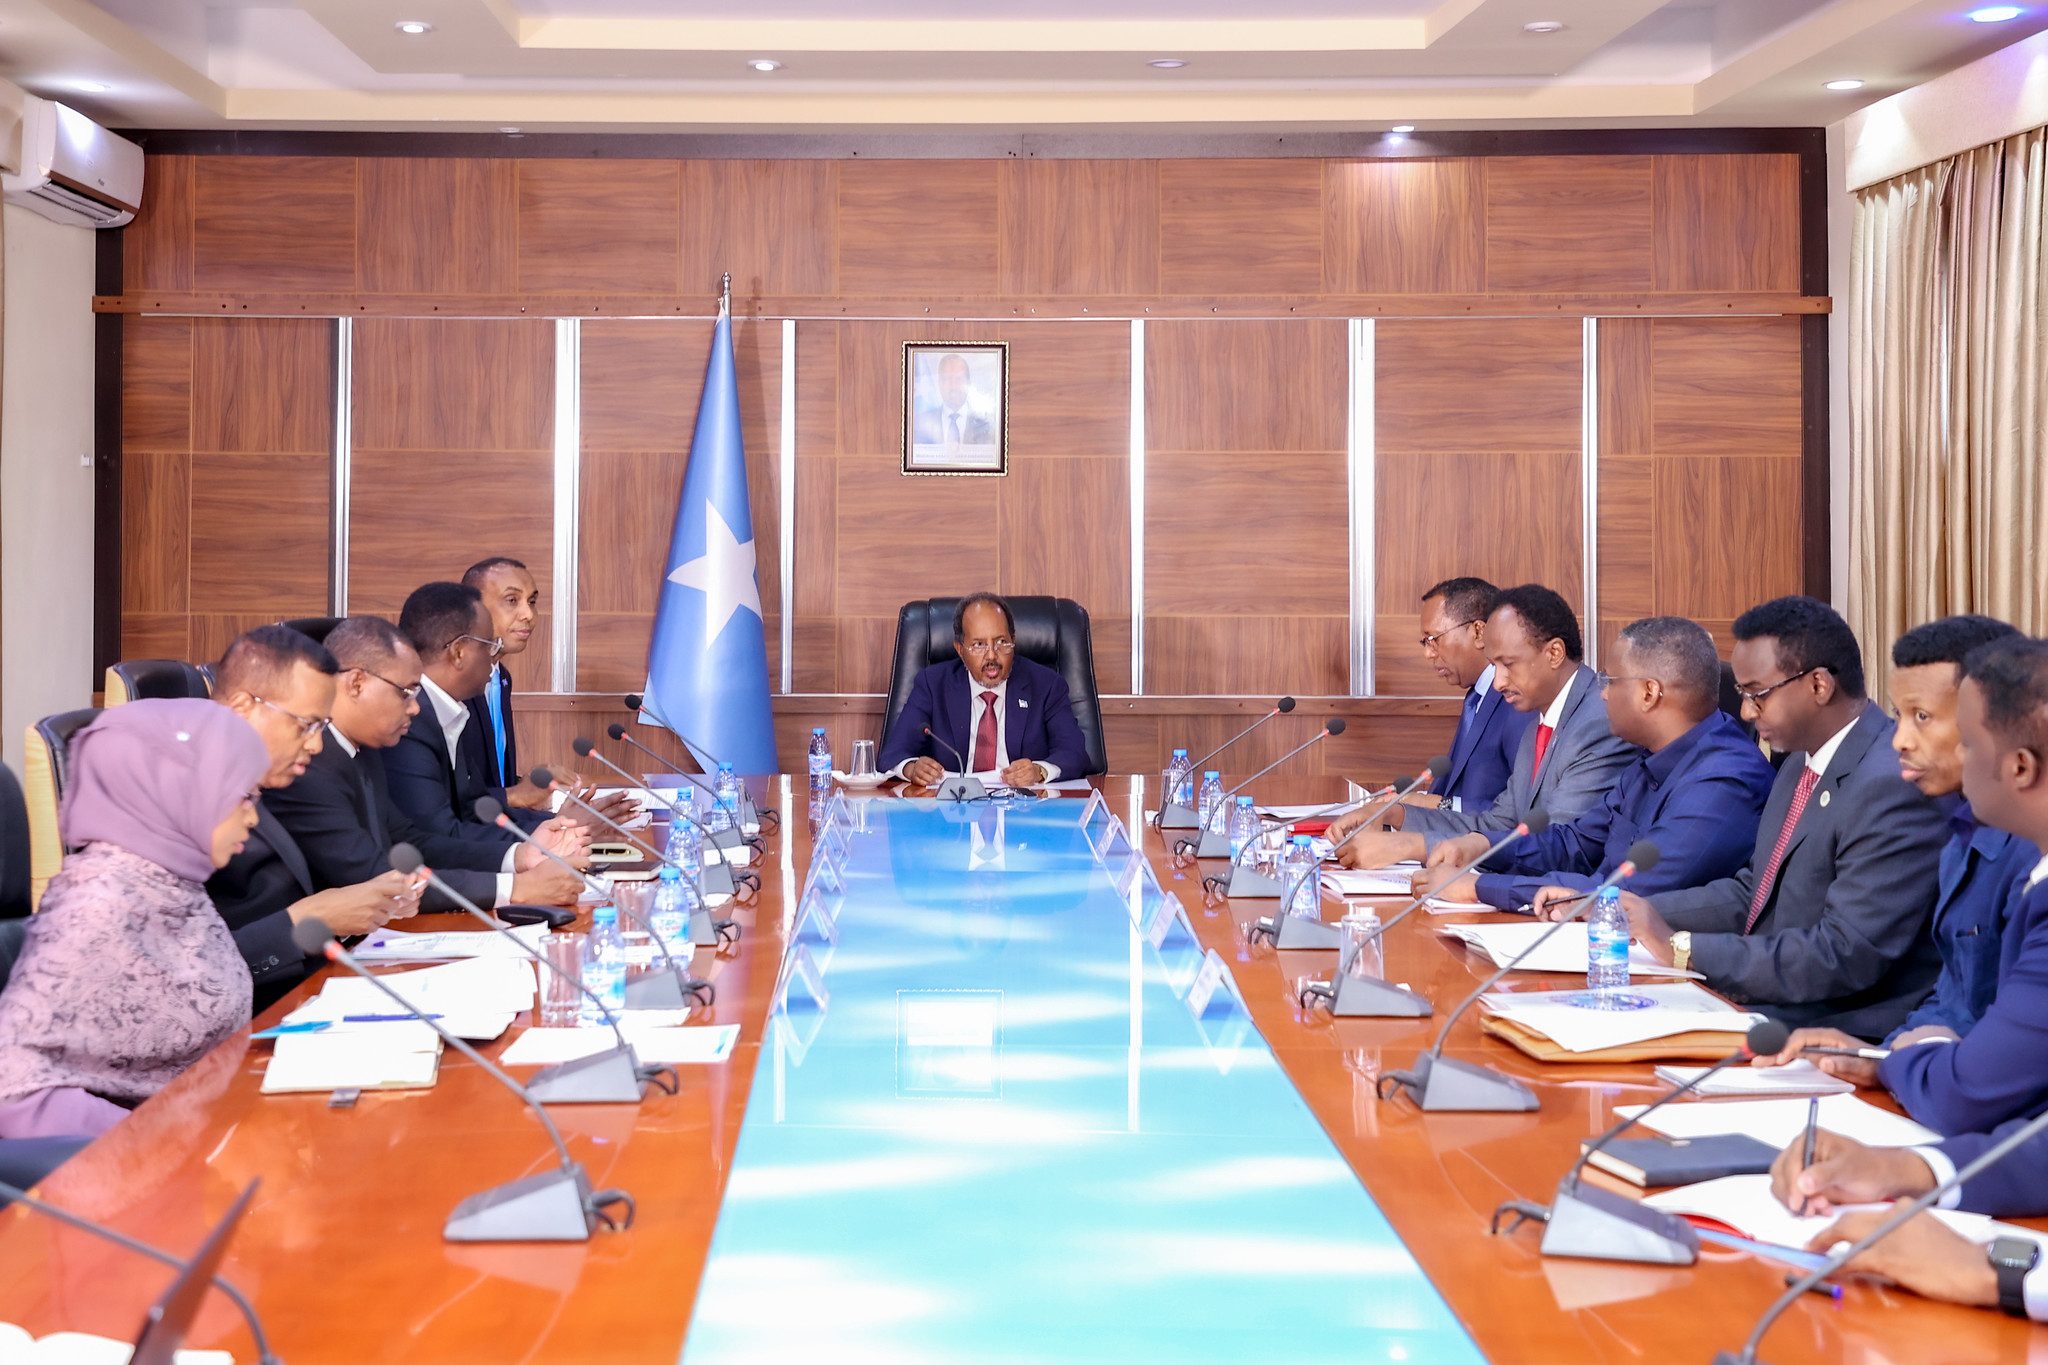 The Somali National Anti-Money laundering Committee (NAMLC) MEETING